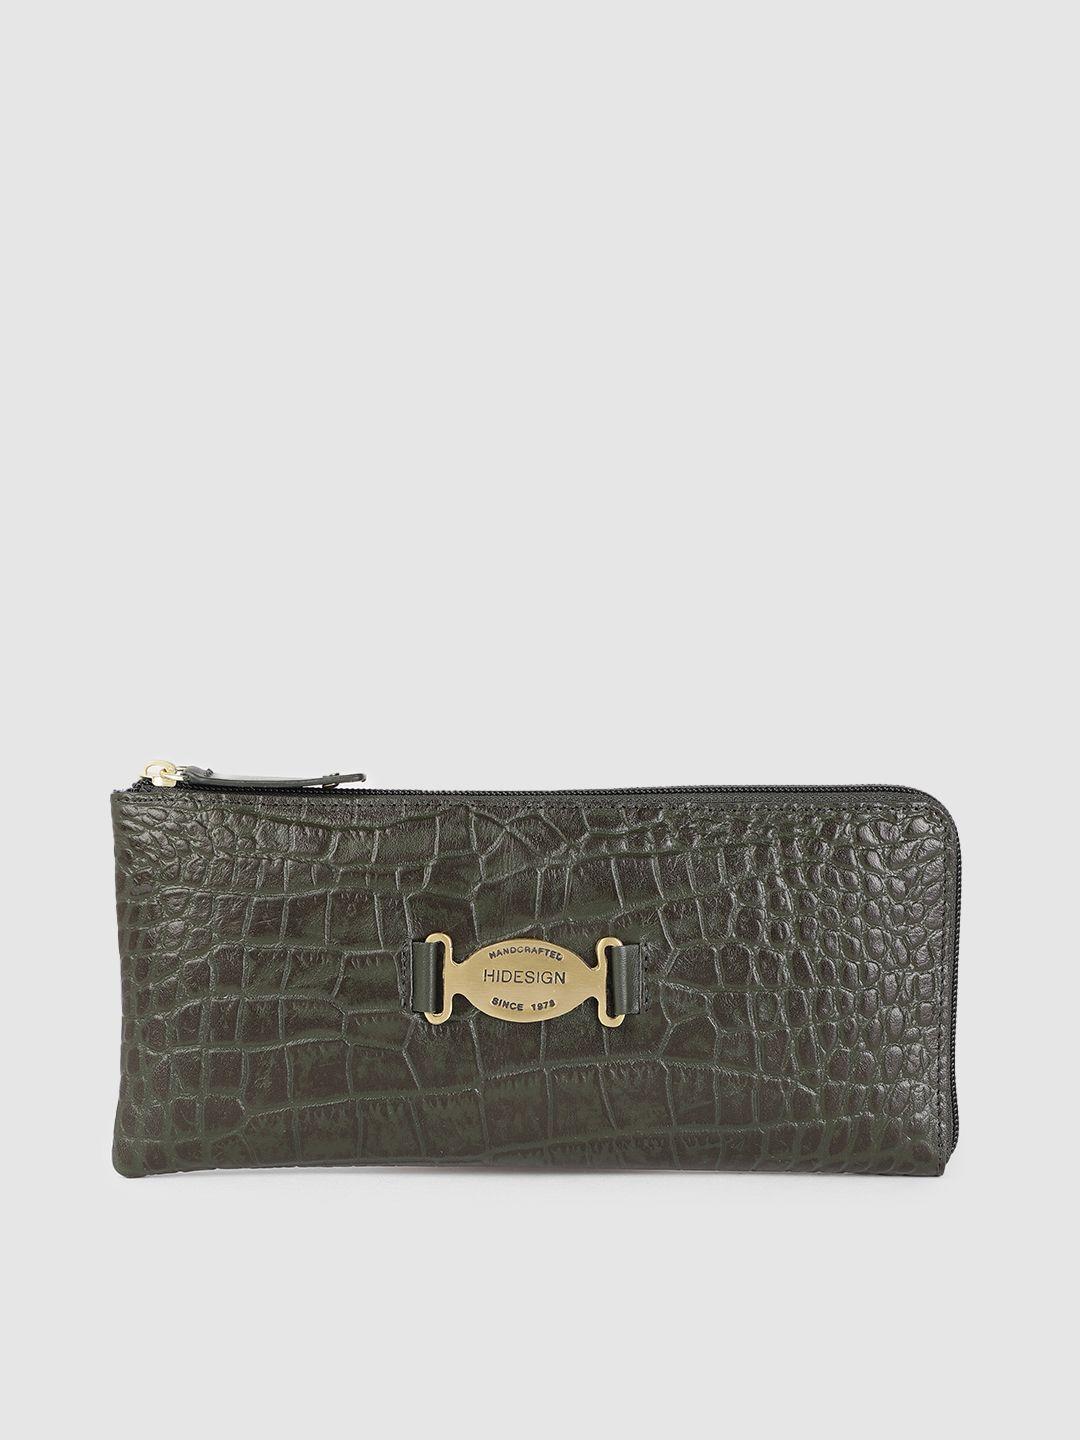 hidesign women olive green textured leather zip around wallet